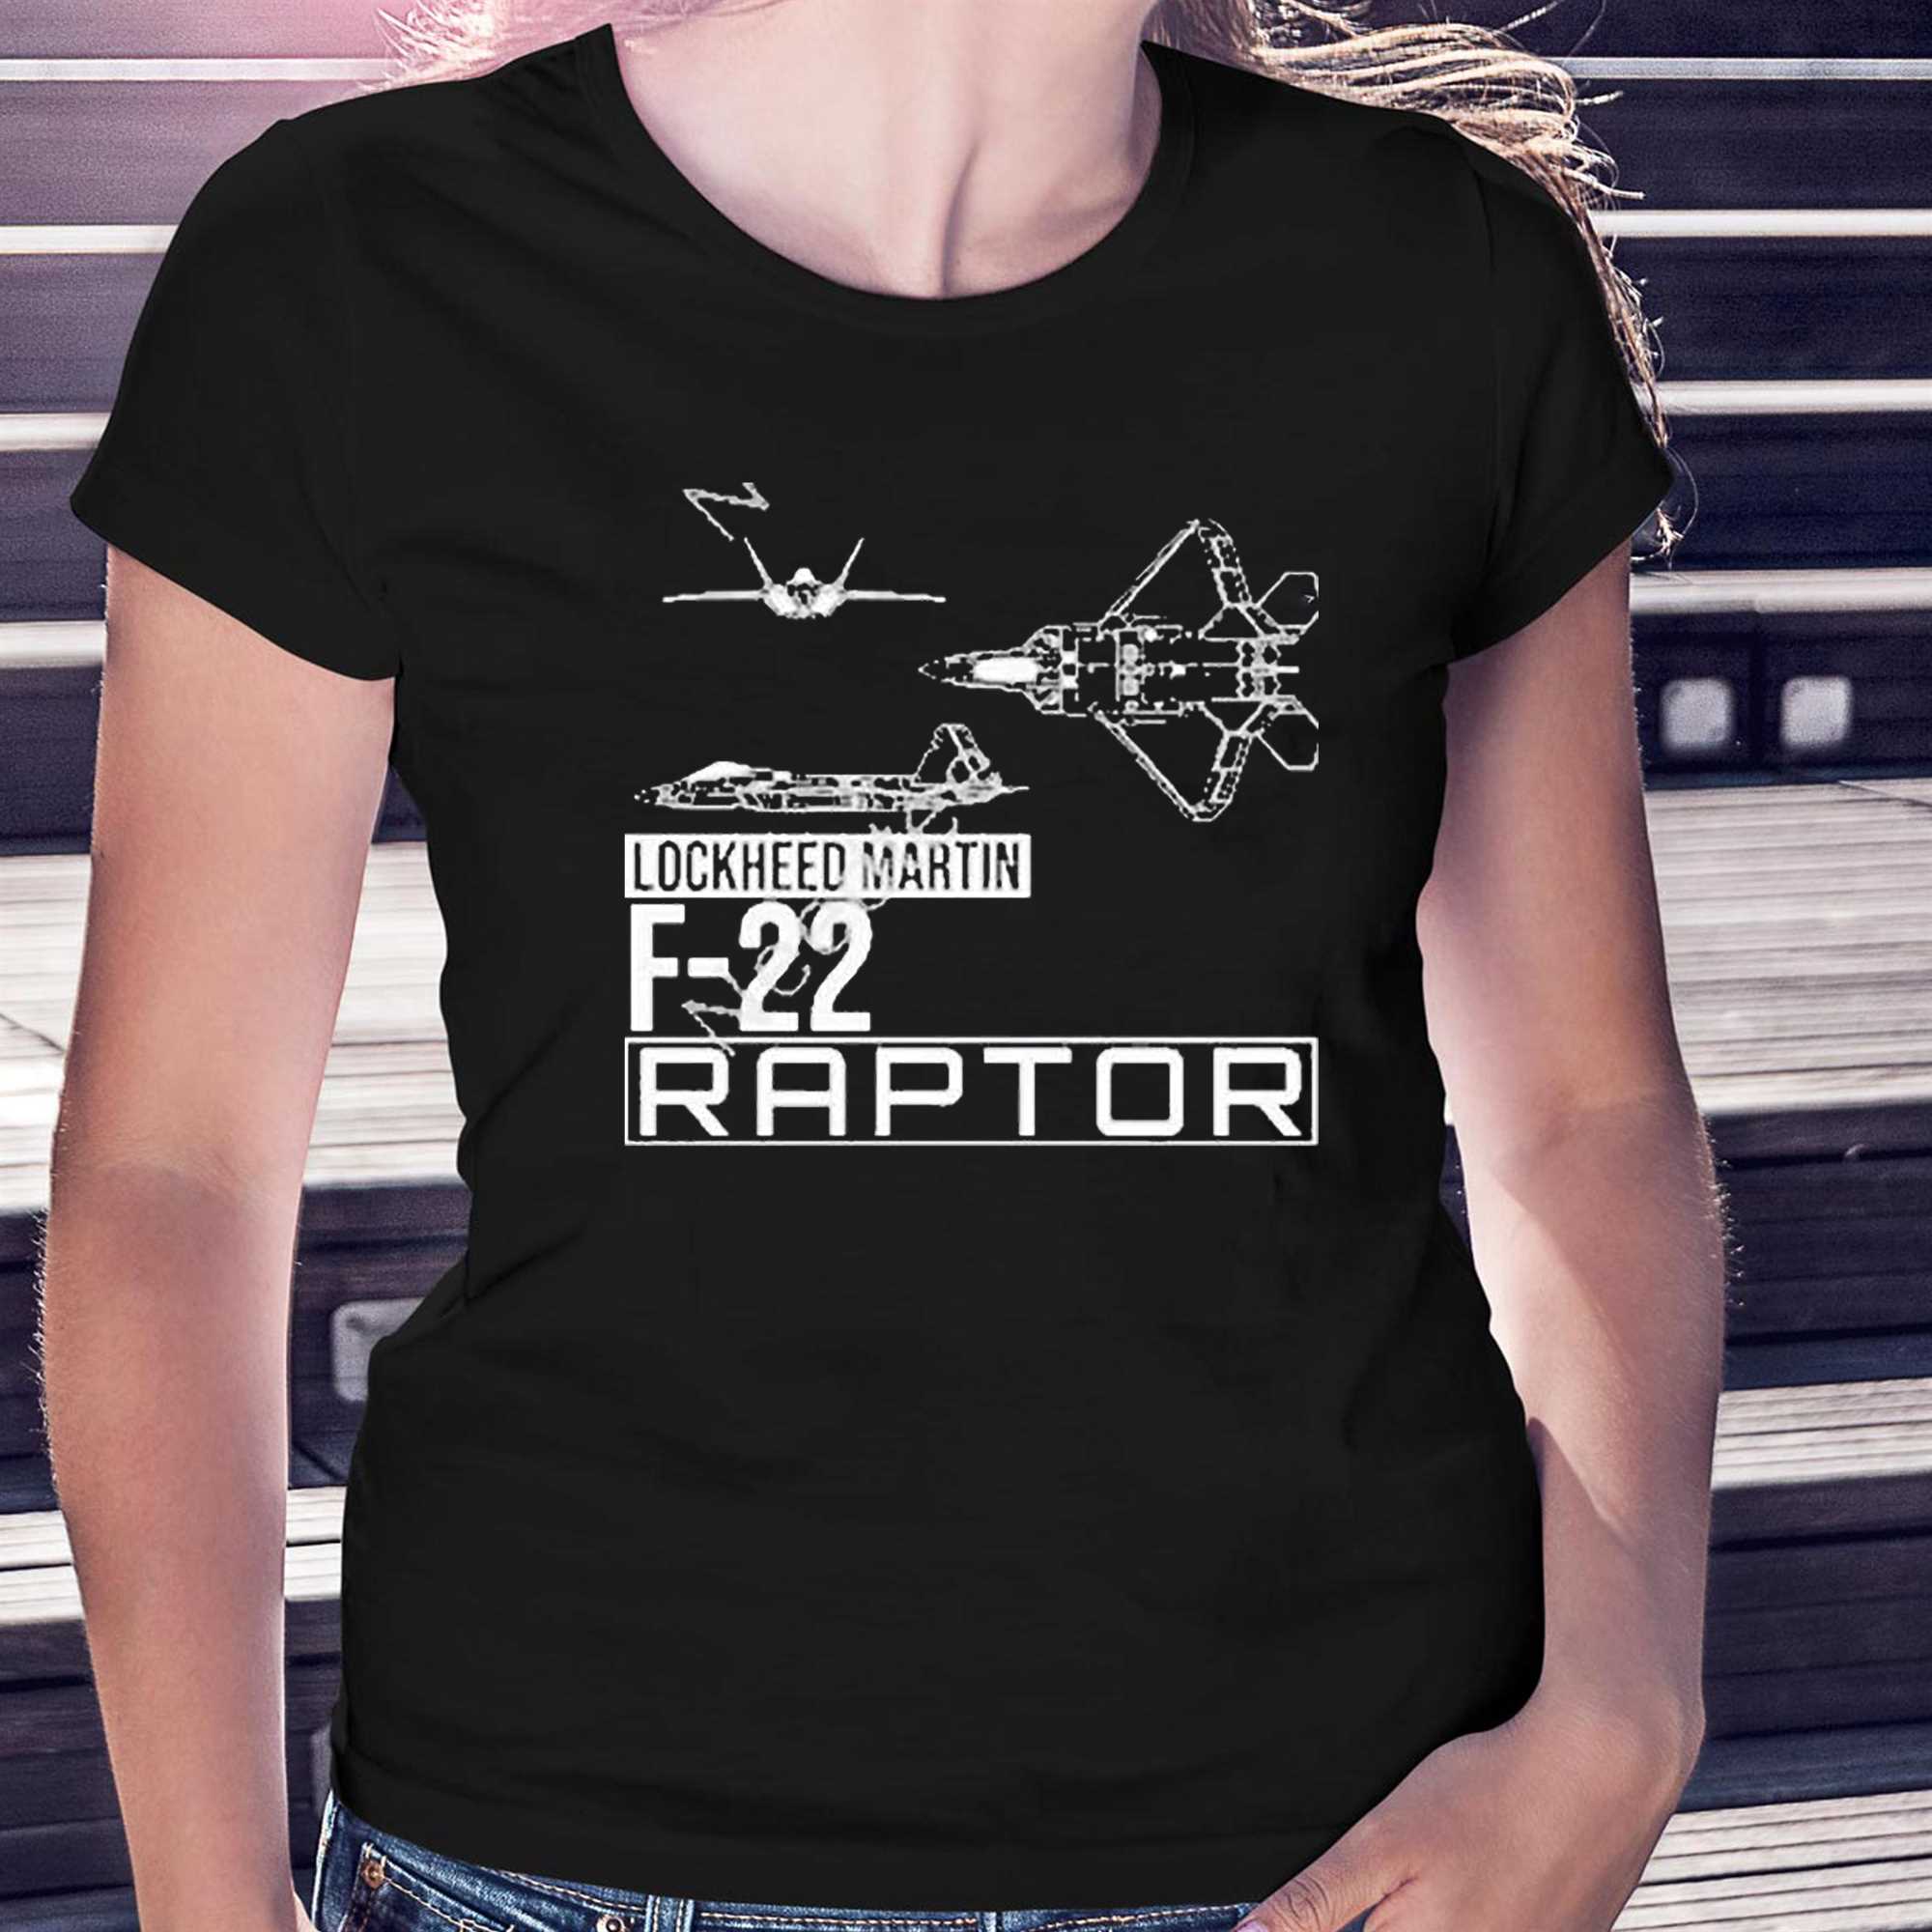 Lockheed Martin F-22 Raptor t-shirt by To-Tee Clothing - Issuu